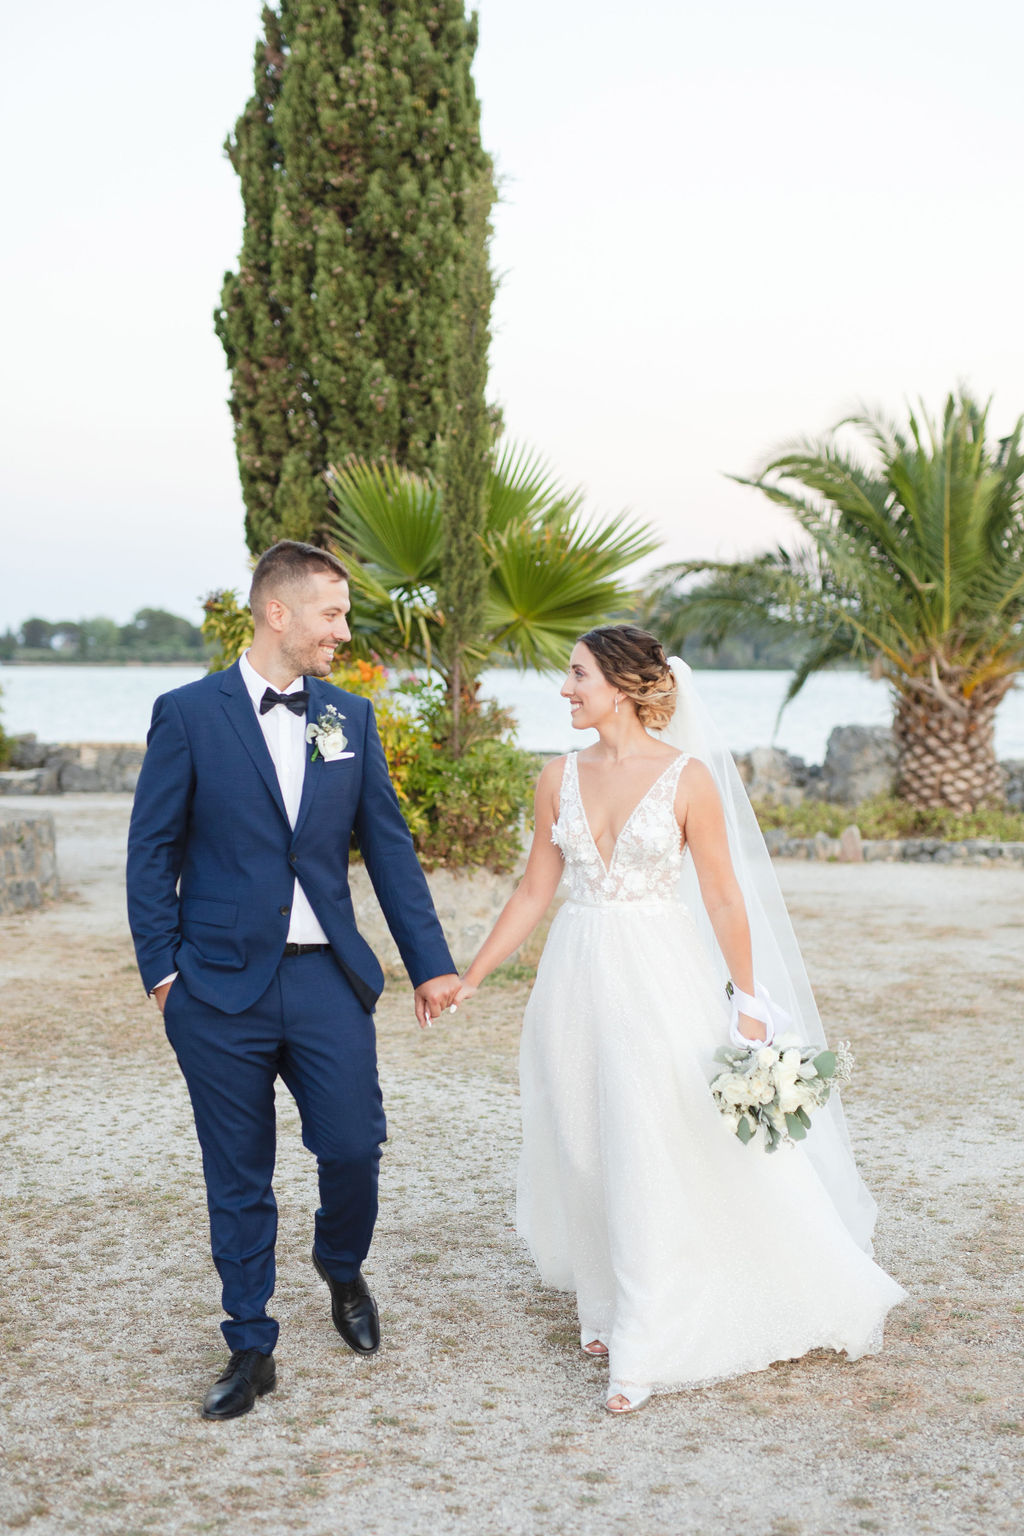 Eνας καλοκαιρινός γάμος στην Κέρκυρα- Ανθούλα & Θανάσης